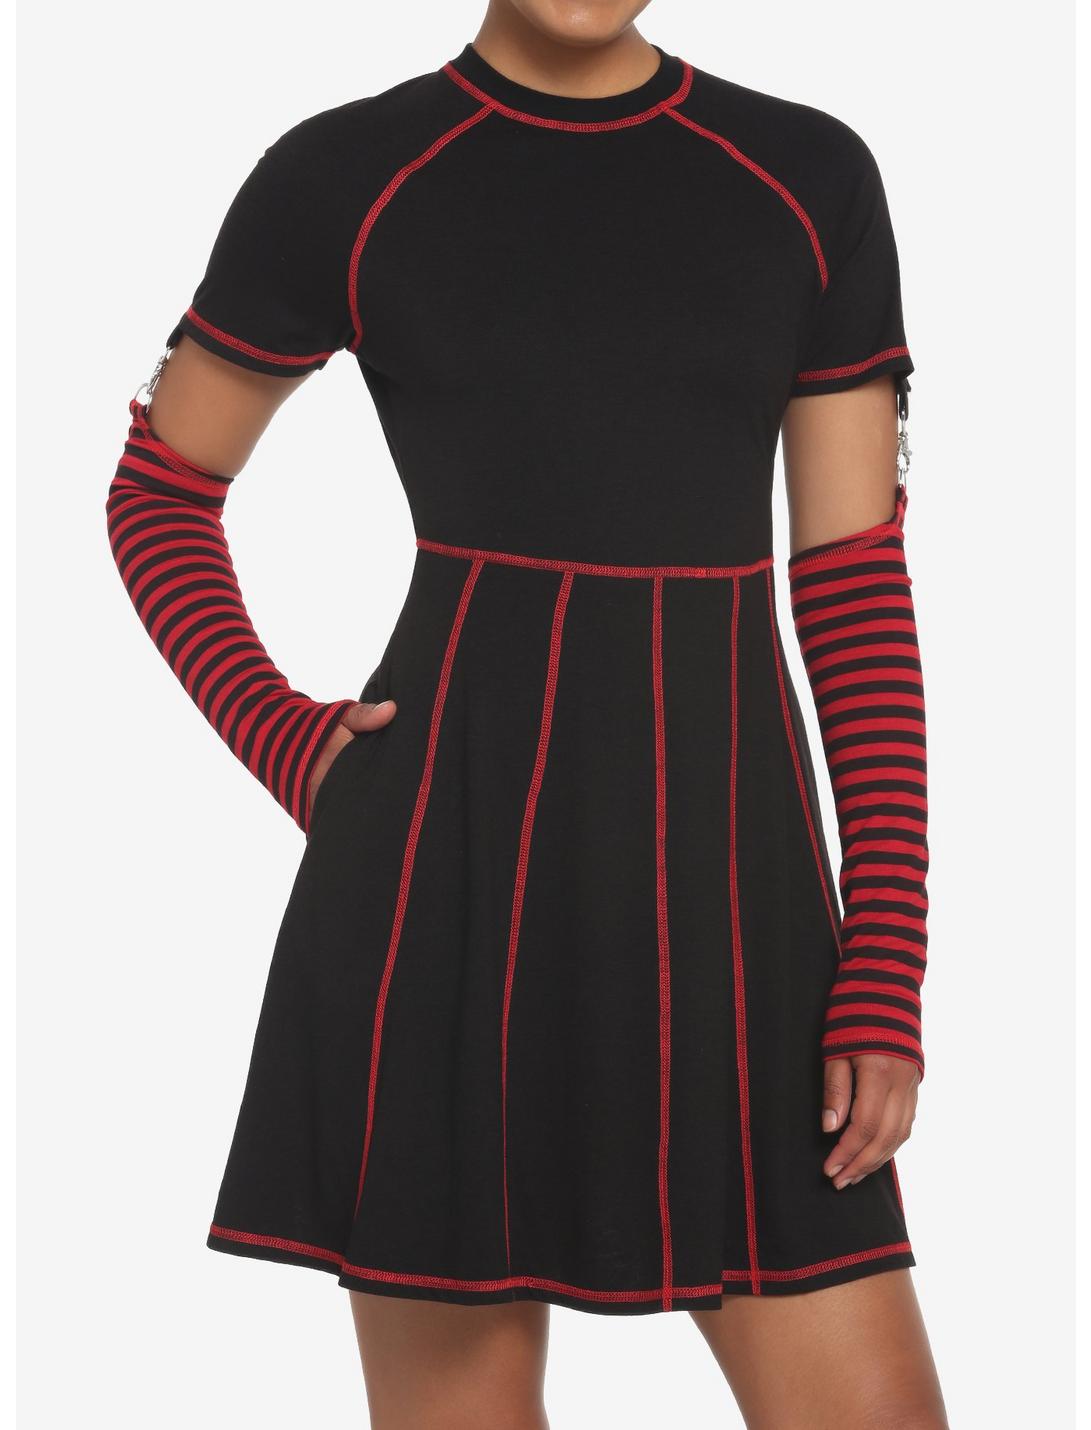 Black & Red Contrast Stitch Arm Warmer Dress, STRIPES - RED, hi-res